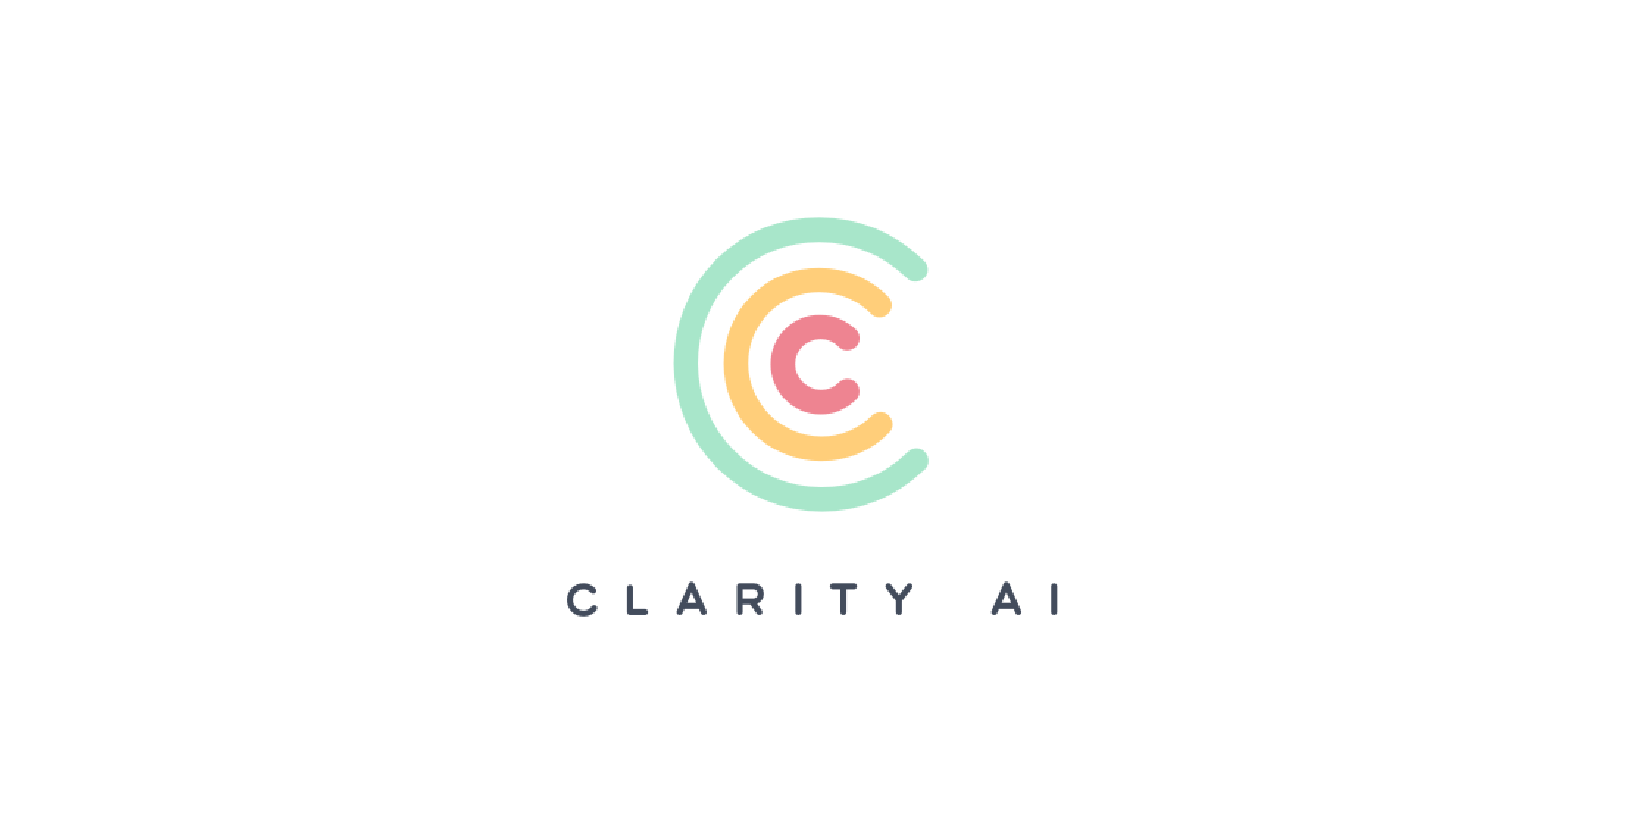 Vision Fund investment portfolio company Clarity AI's logo